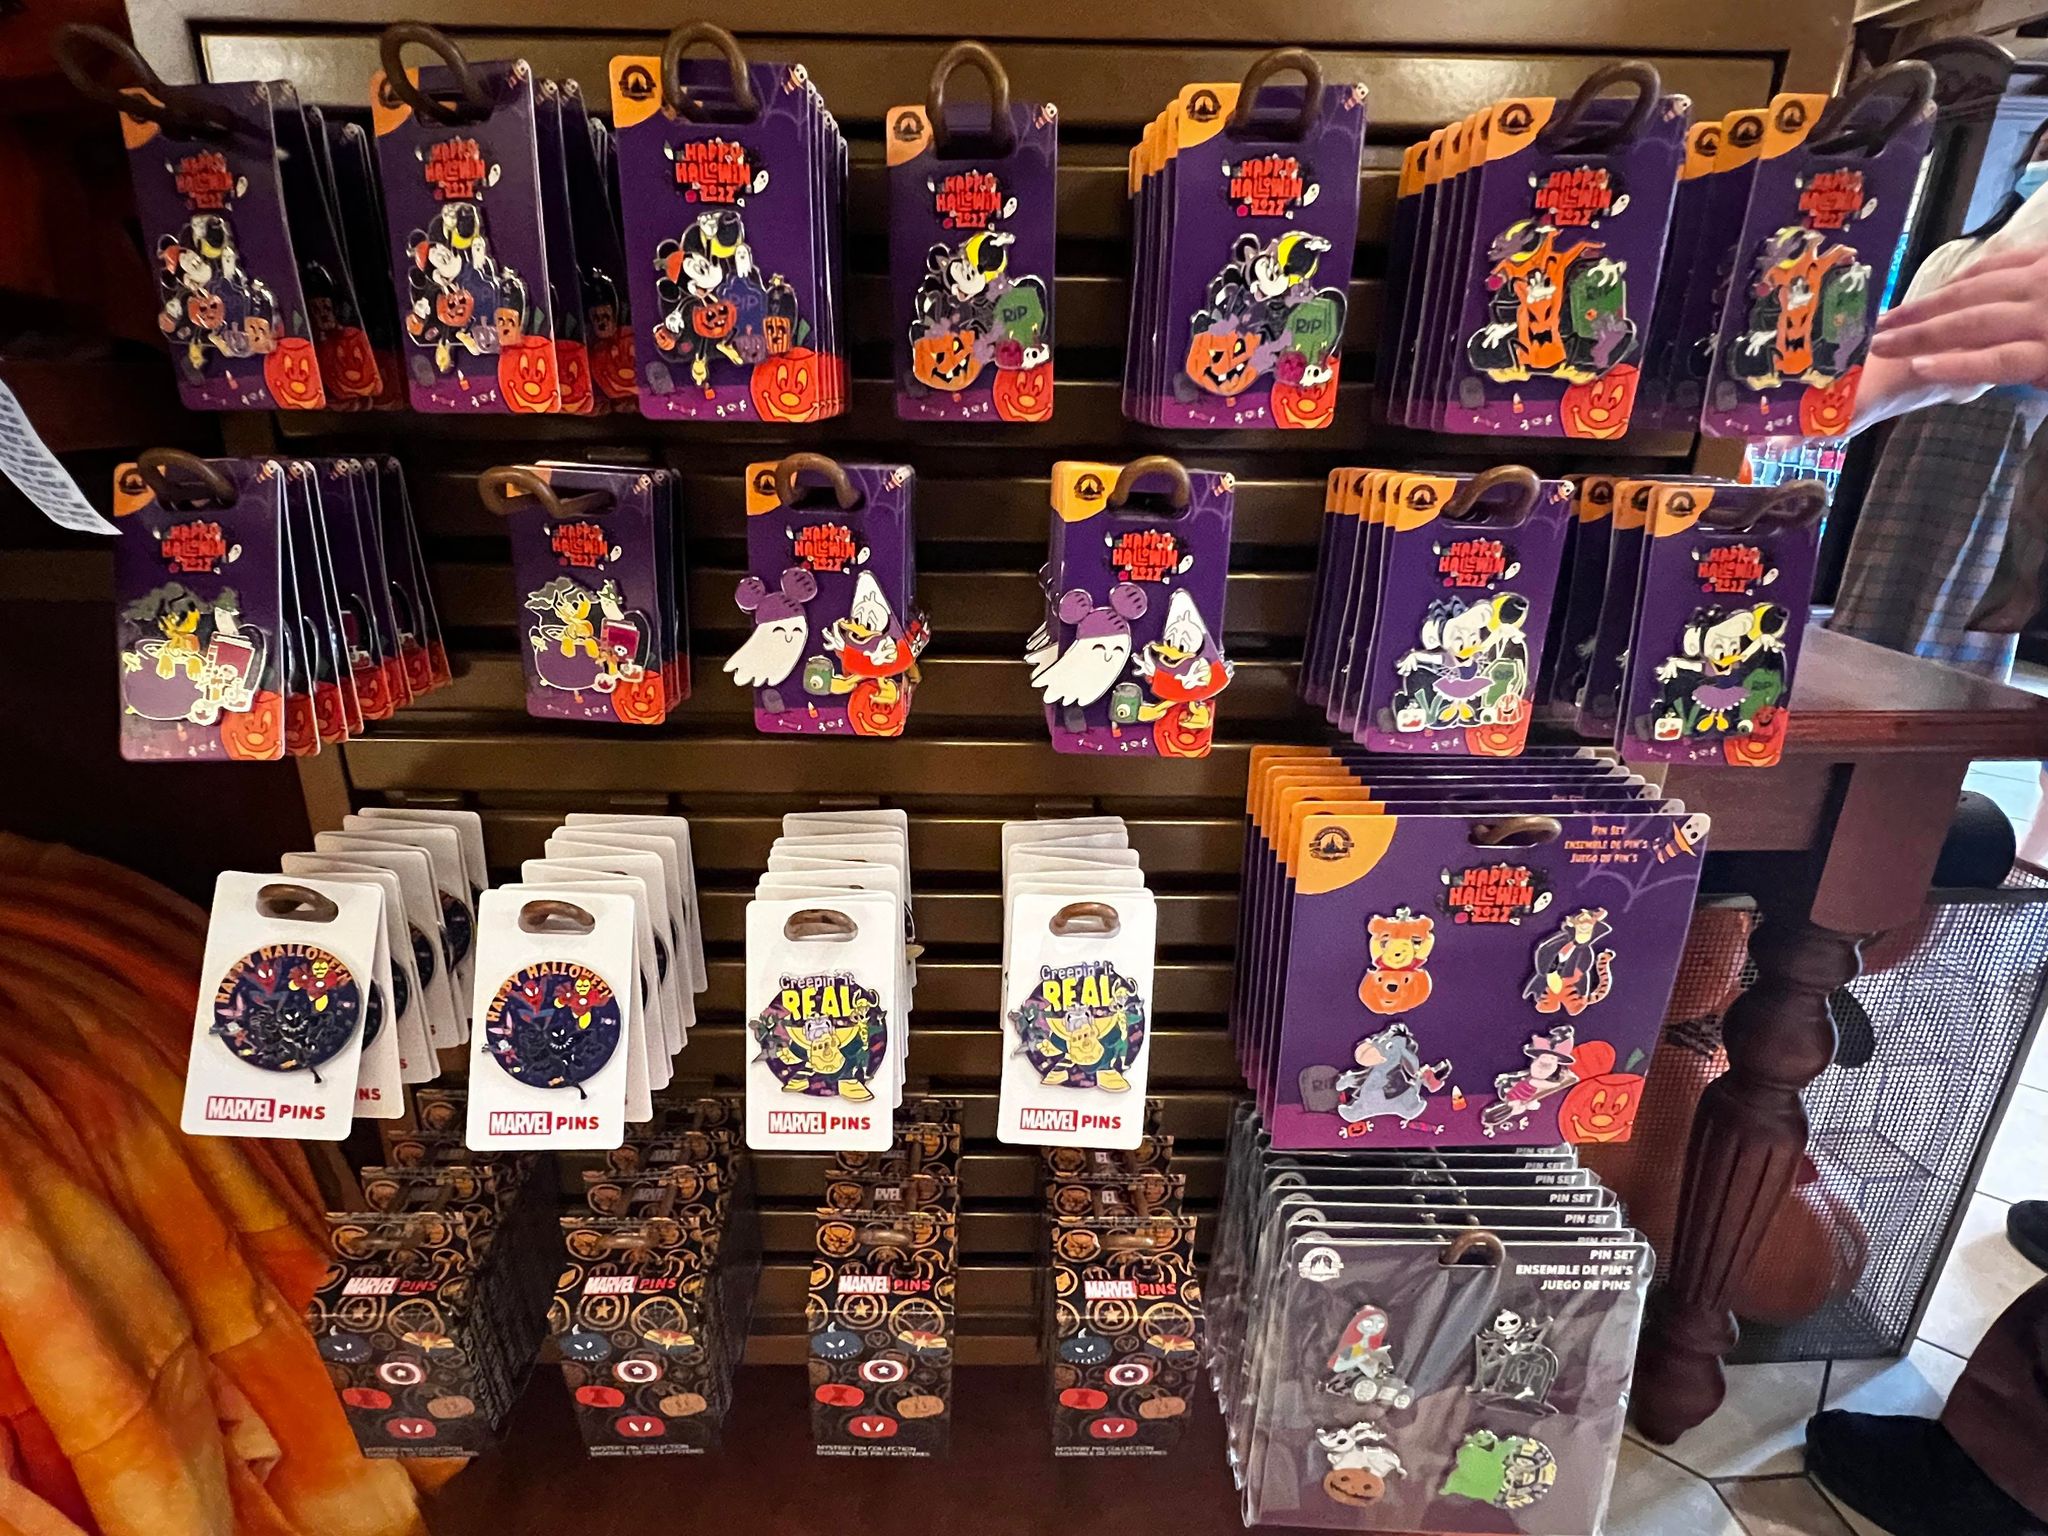 New Pins for the 2022 Halloween Season Arrive at Walt Disney World